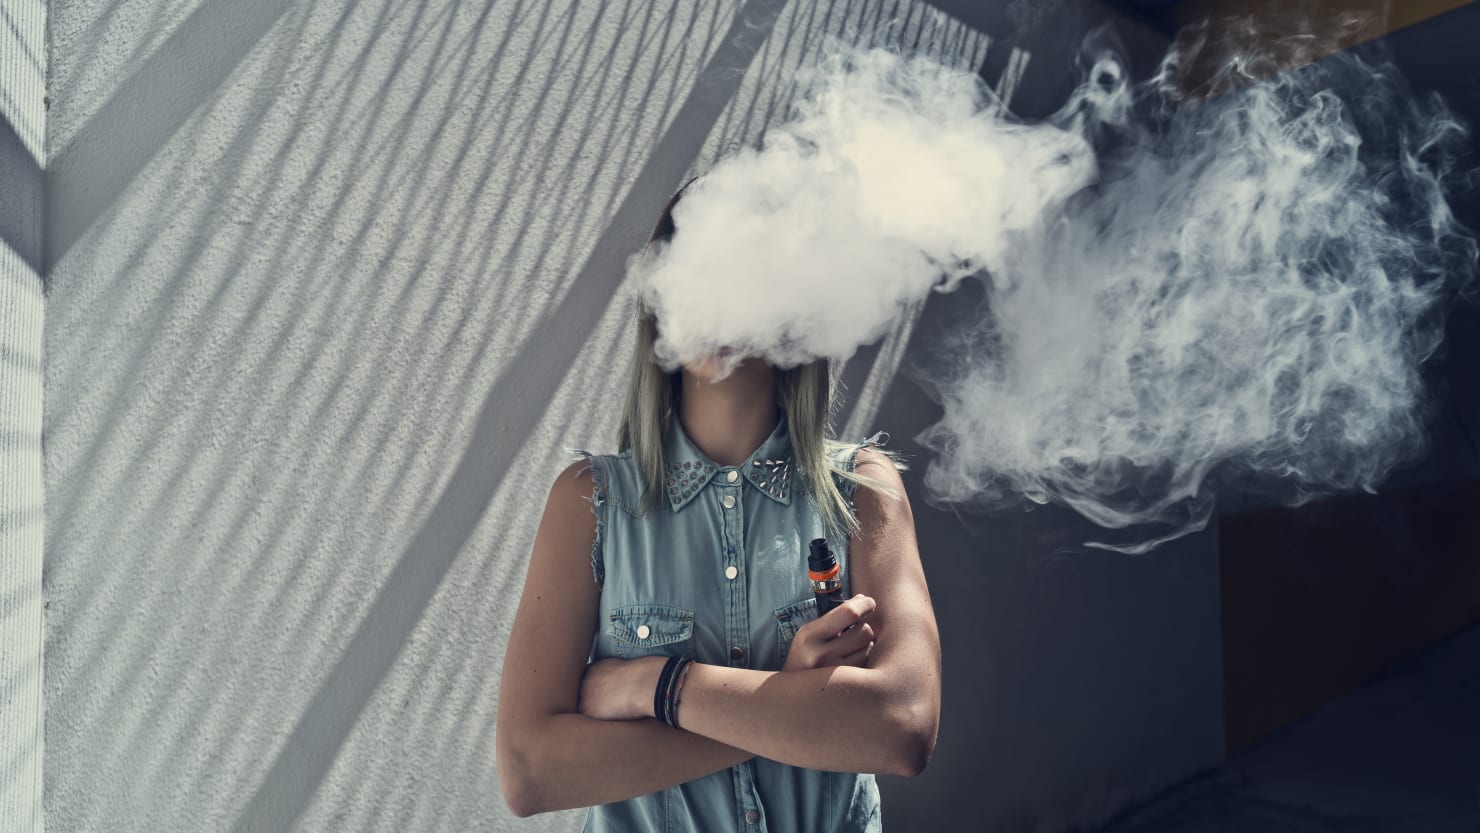 Teen Smoking Linked to Worse Brain Development, Study Finds